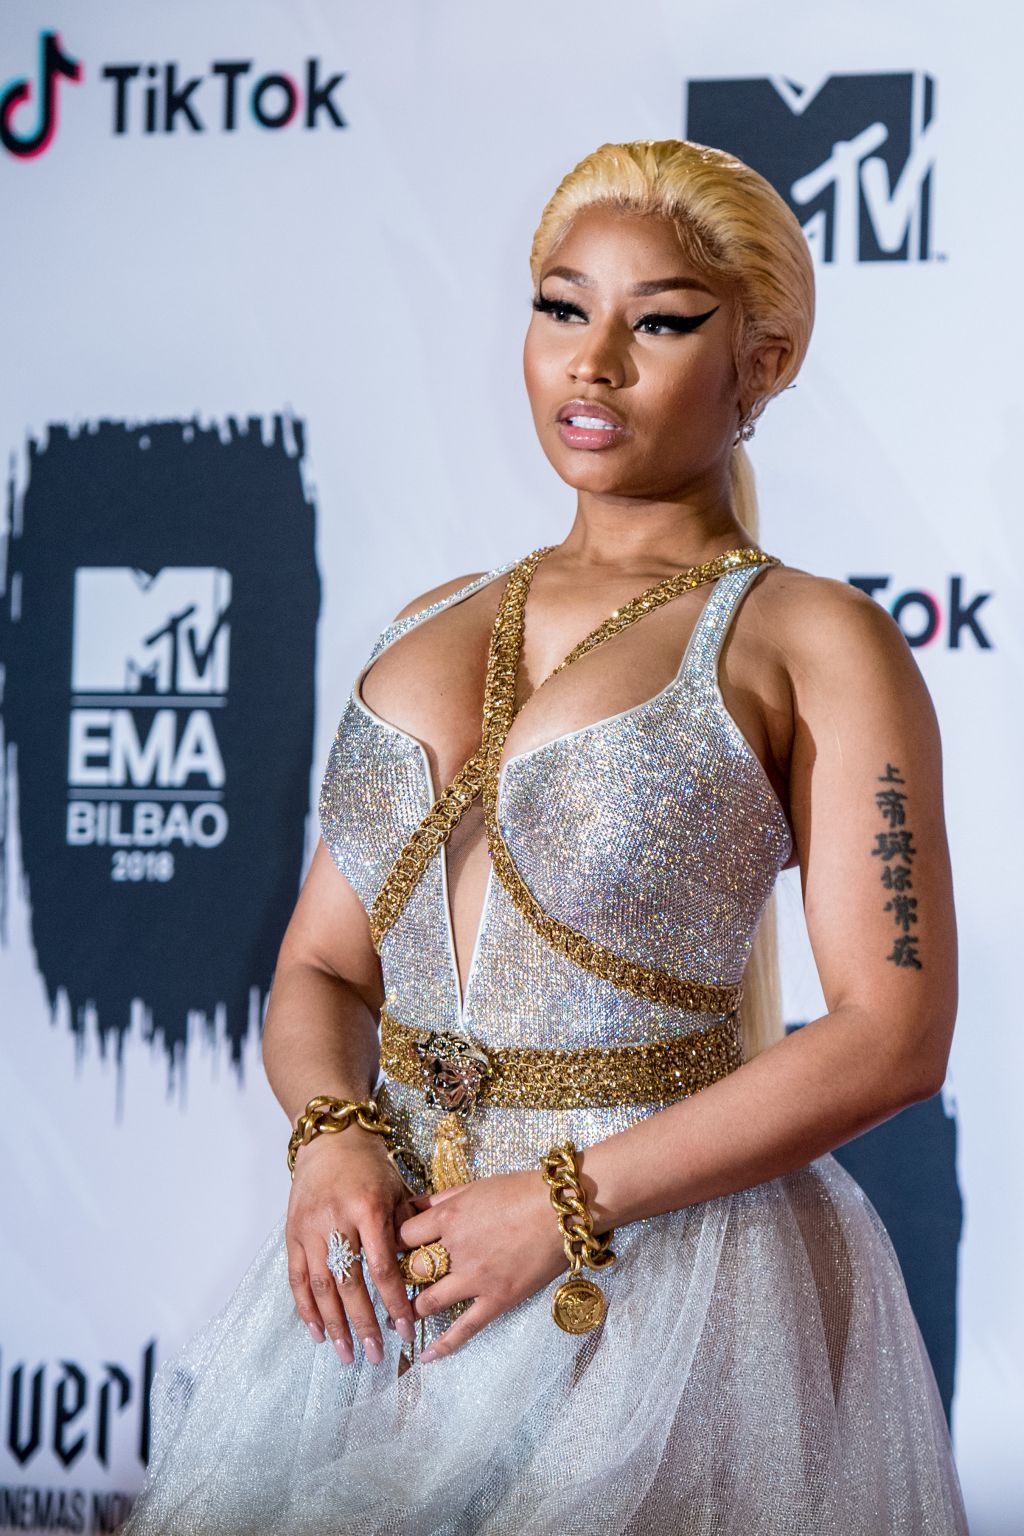 Nicki Minaj Shades the BET Awards Over Its Declining Ratings 93.1 WZAK